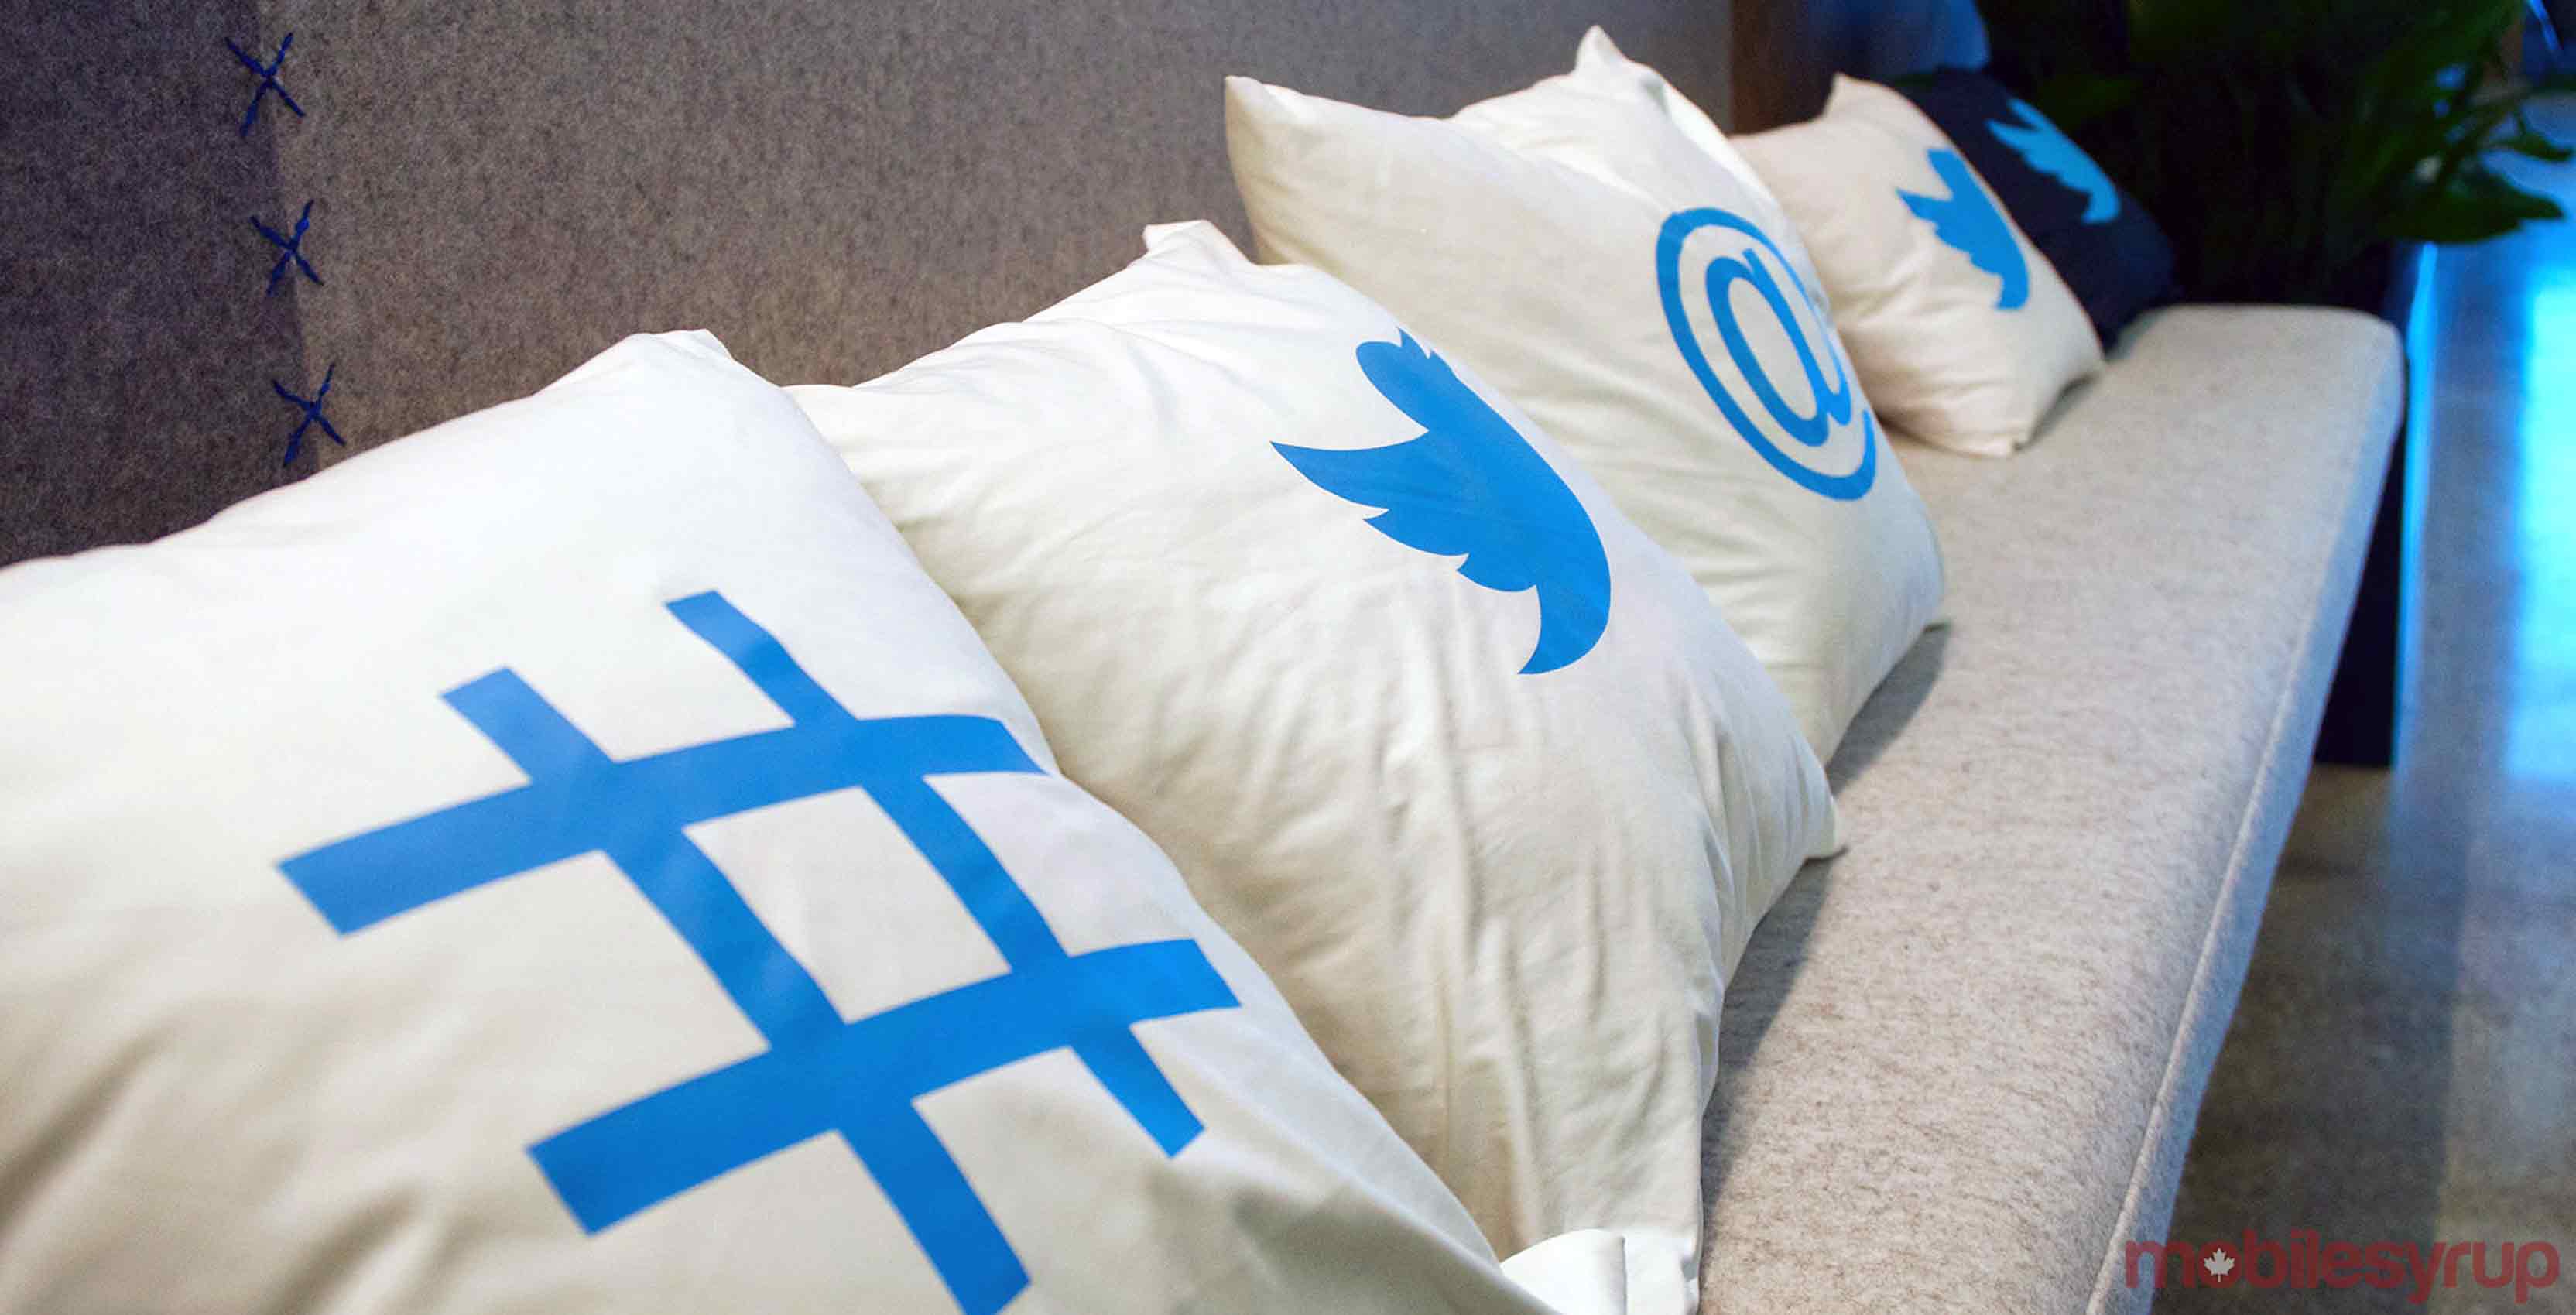 Twitter Canada office pillows